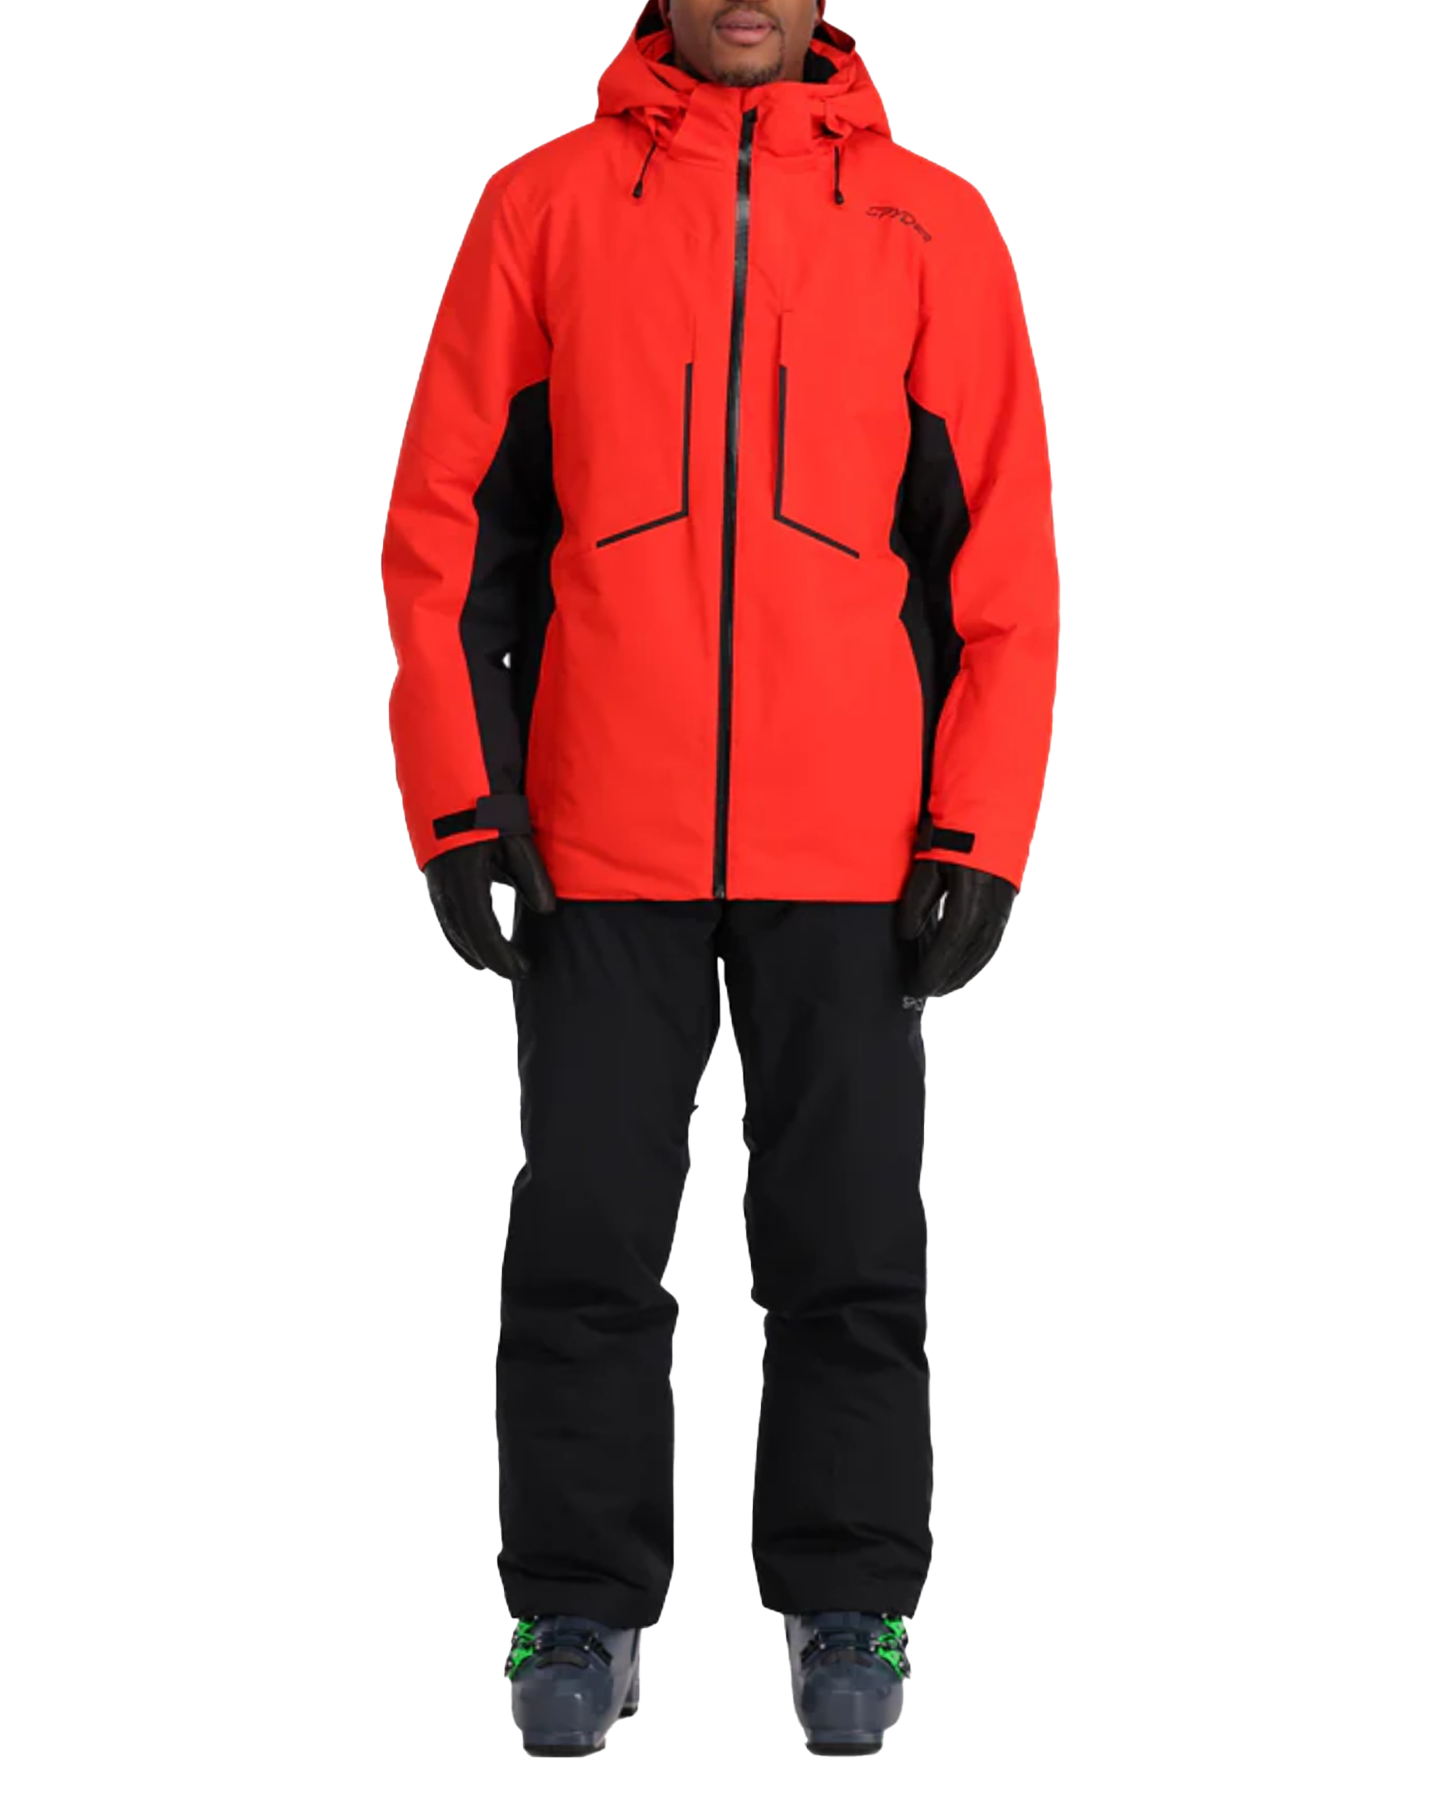 Spyder Primer Jacket - Volcano Men's Snow Jackets - SnowSkiersWarehouse